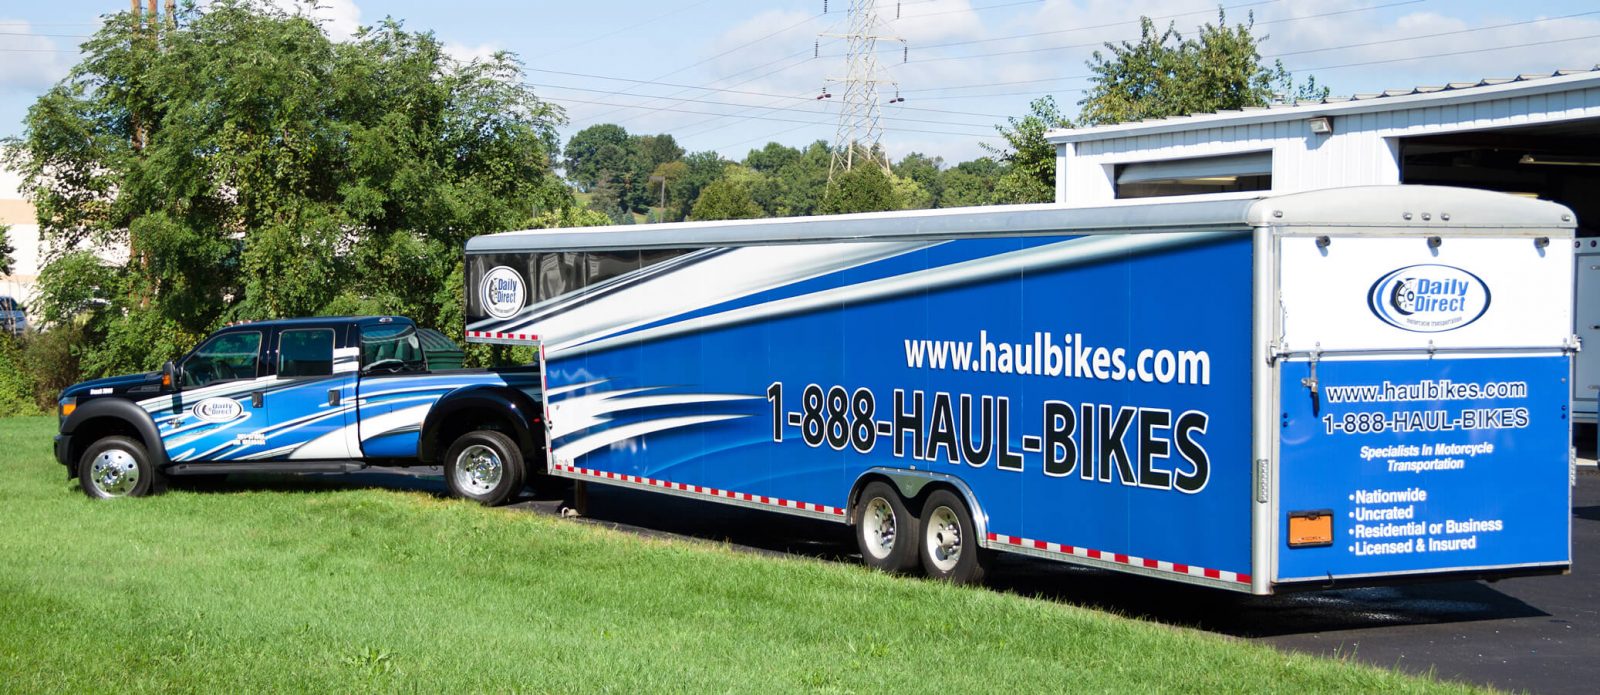 Haul Bikes Vehicle Wrap by Caskey Group